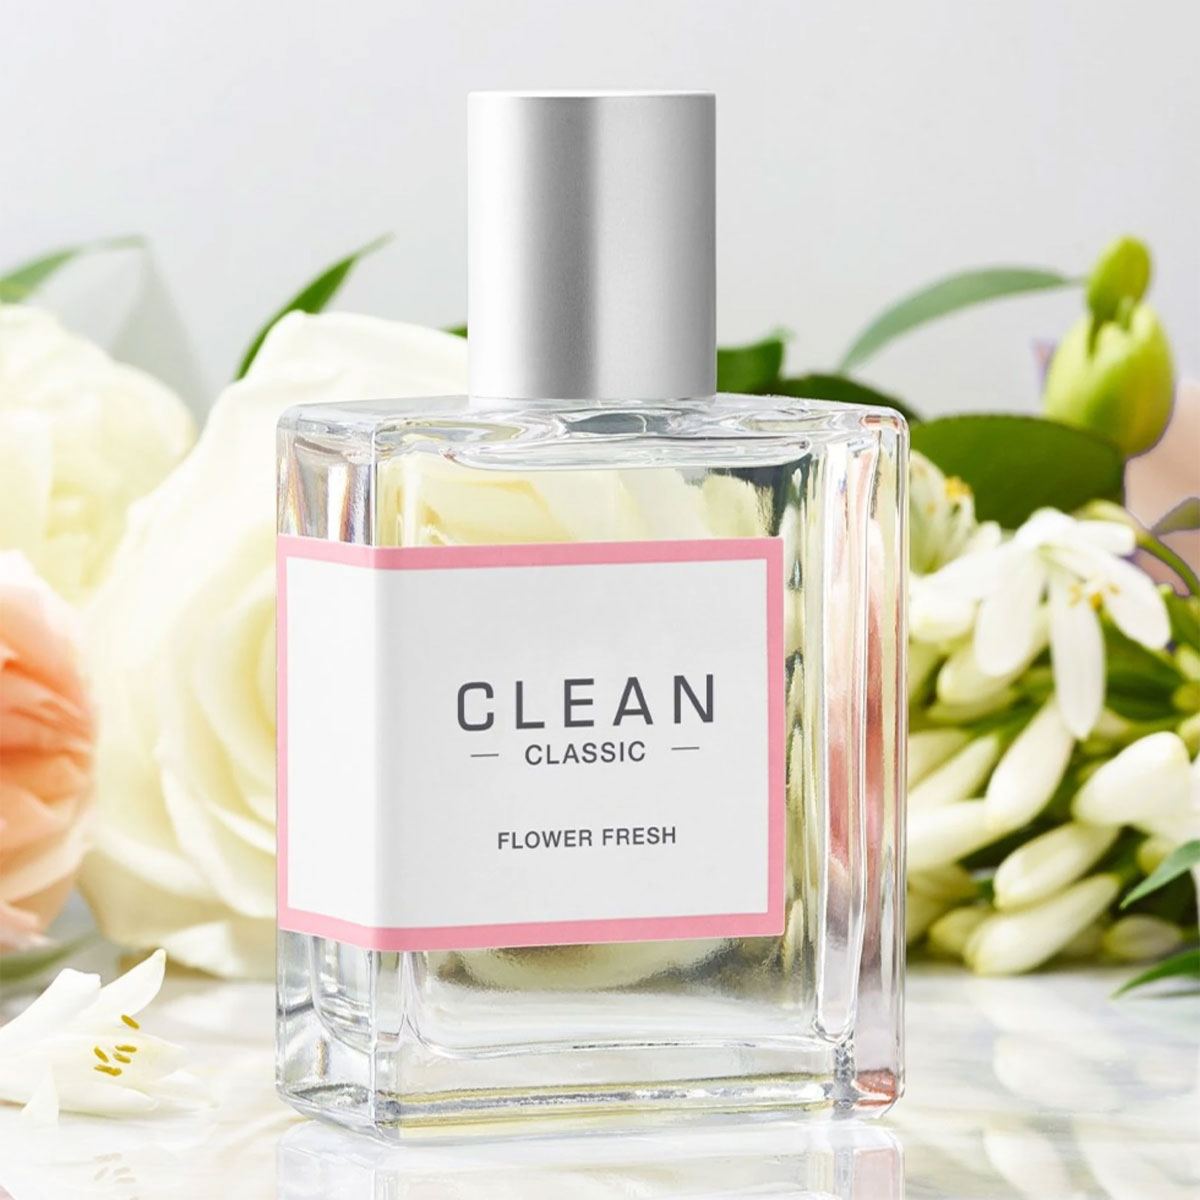 CLEAN Classic Flower Fresh Perfume